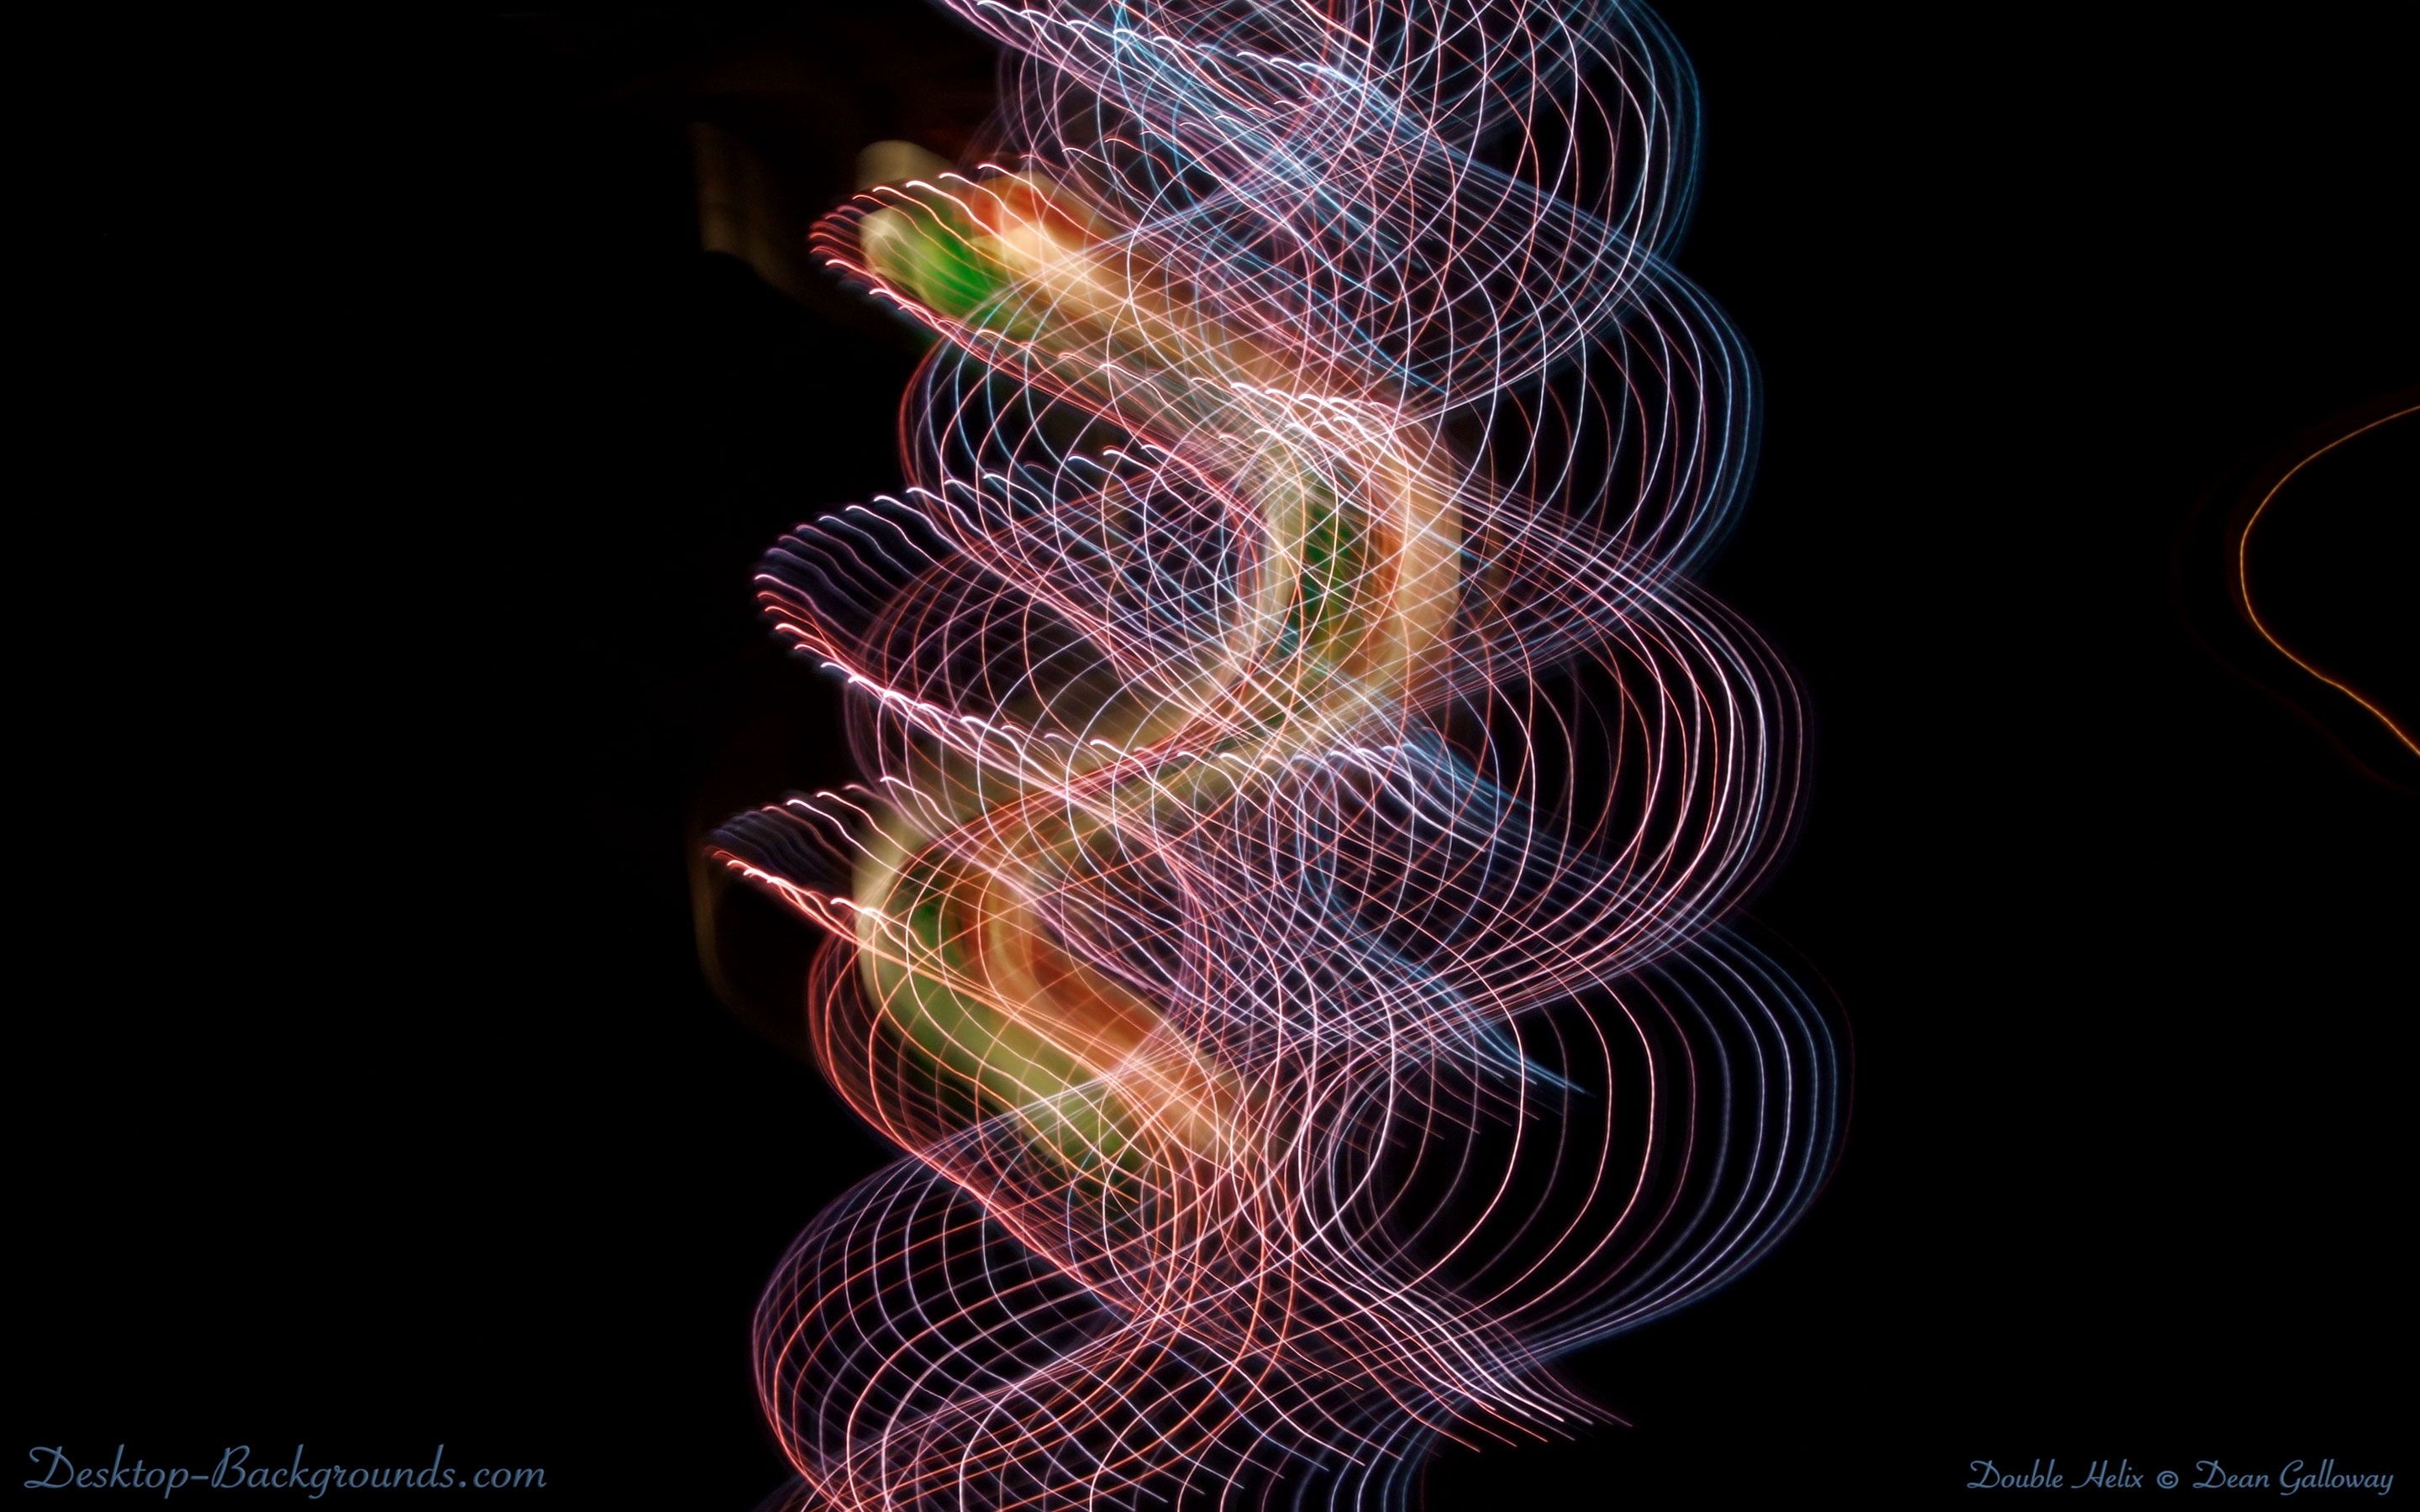 2880x1800 "Double Helix" desktop background ~ looks like DNA twirling in space.